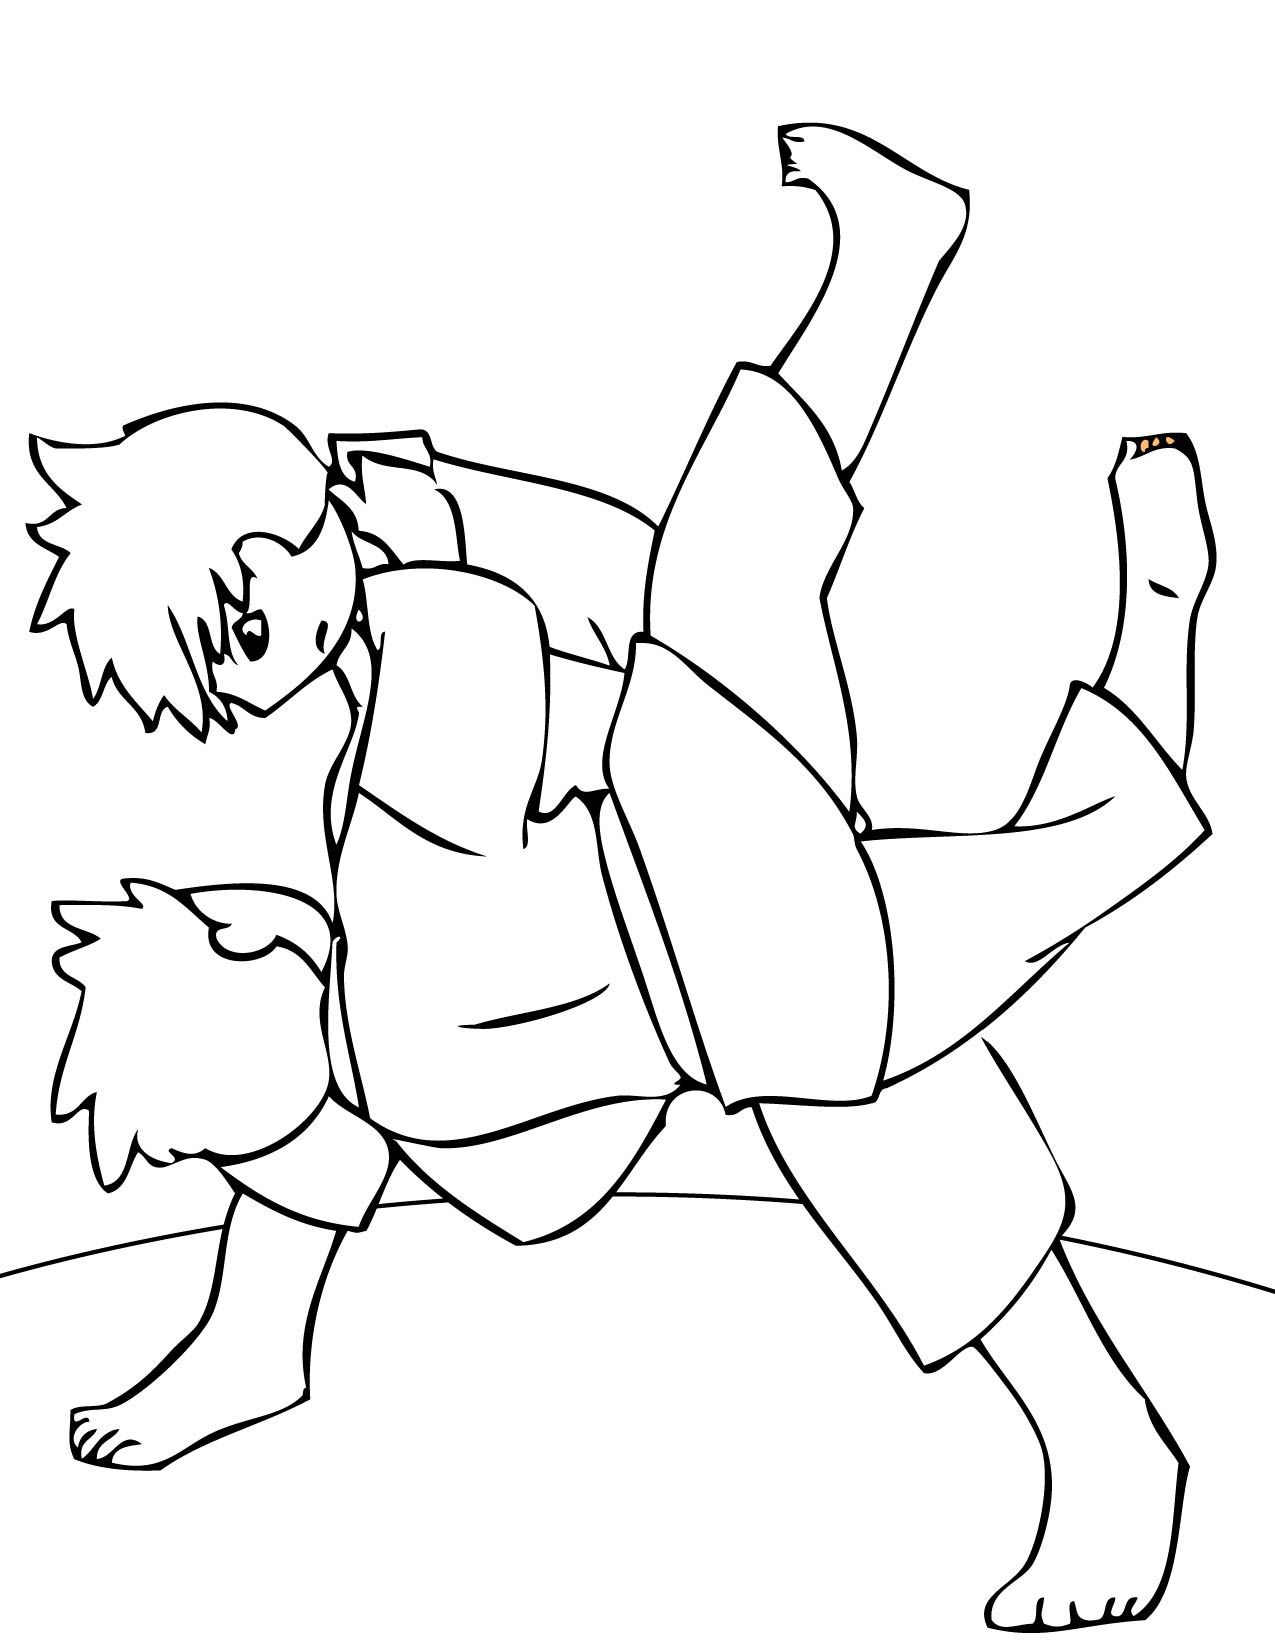 judo-coloring-page-0004-q1